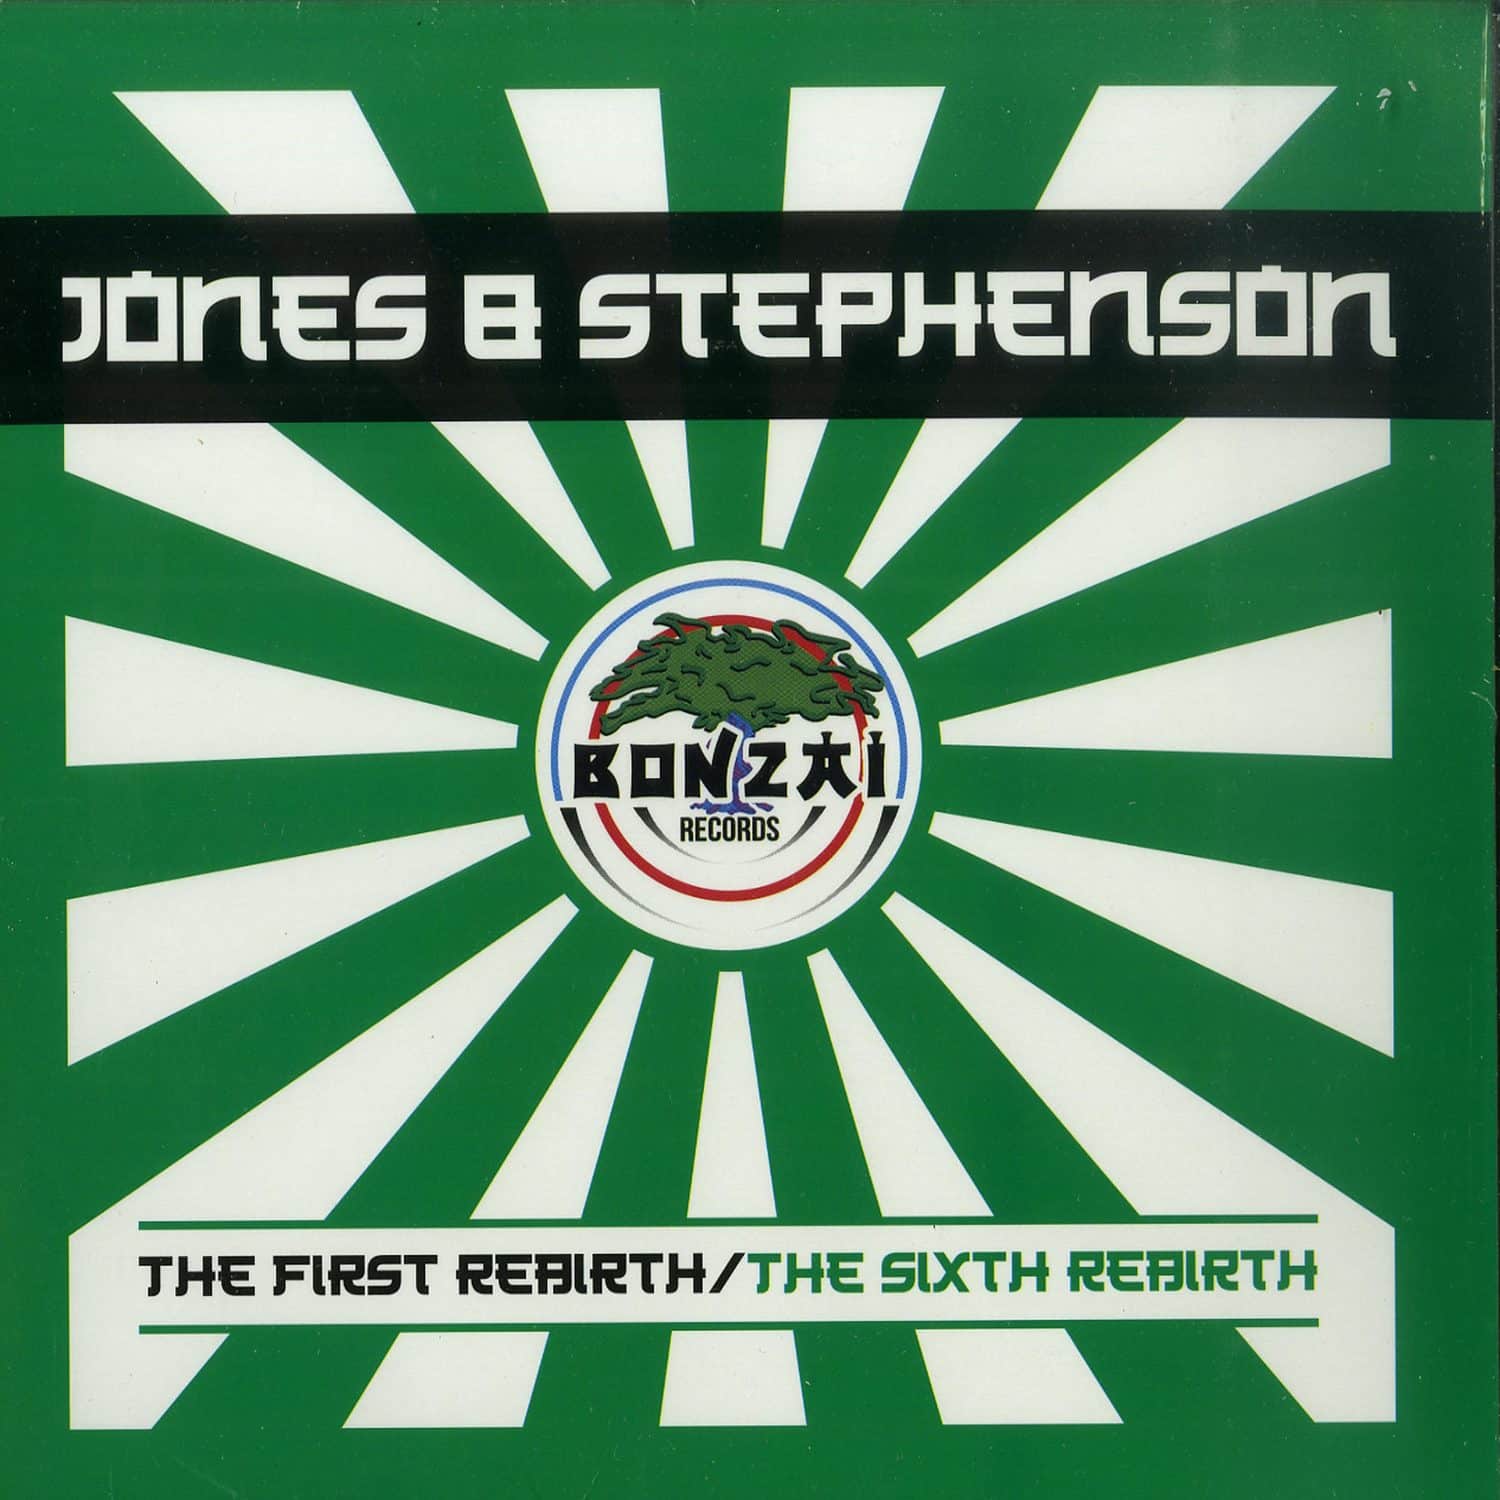 Jones & Stephenson - THE FIRST REBIRTH/THE SIXTH REBIRTH 